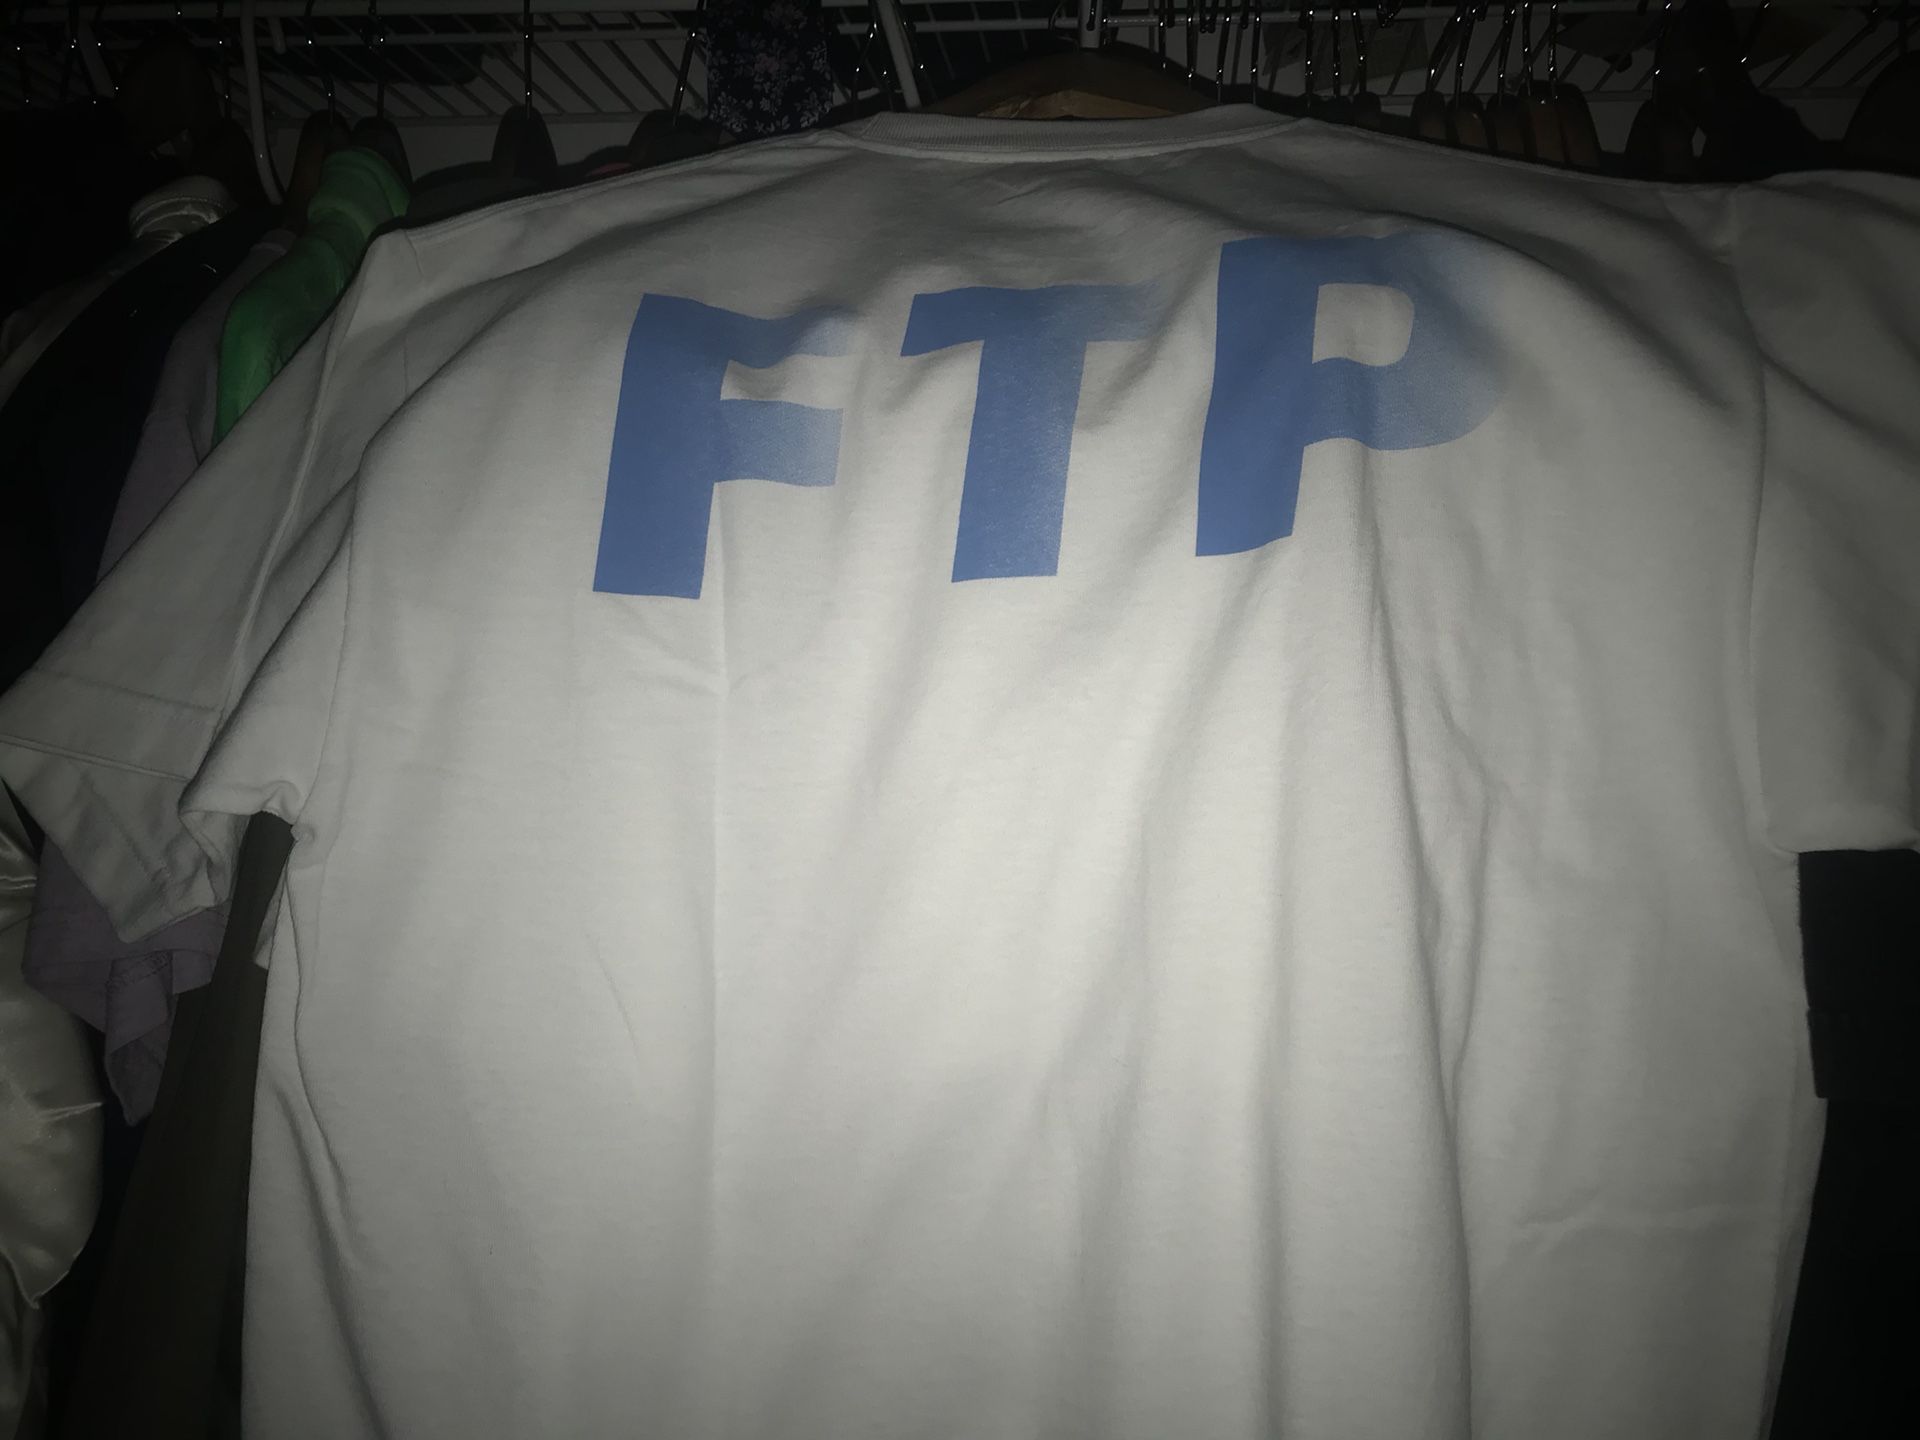 FTP motion logo shirt new never worn size large supreme hype bape palace